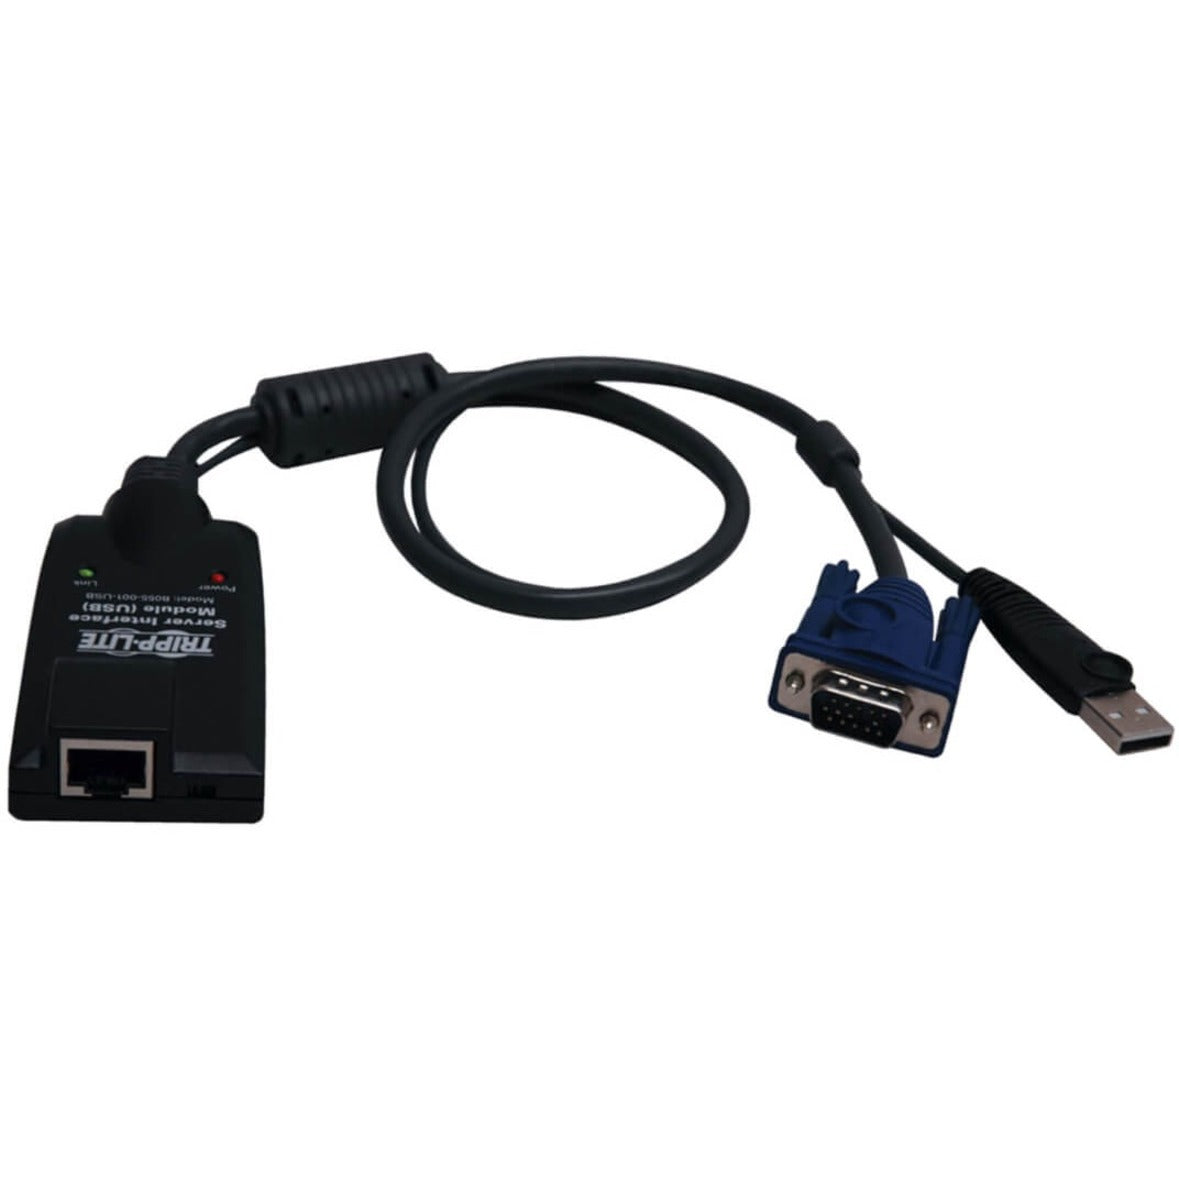 Tripp Lite B055-001-USB-V2 NetDirector服务器接口模块电缆适配器，数据传输电缆 汉字的翻译：Tripp Lite 三宝灯 B055-001-USB-V2 NetDirector服务器接口模块电缆适配器，数据传输电缆